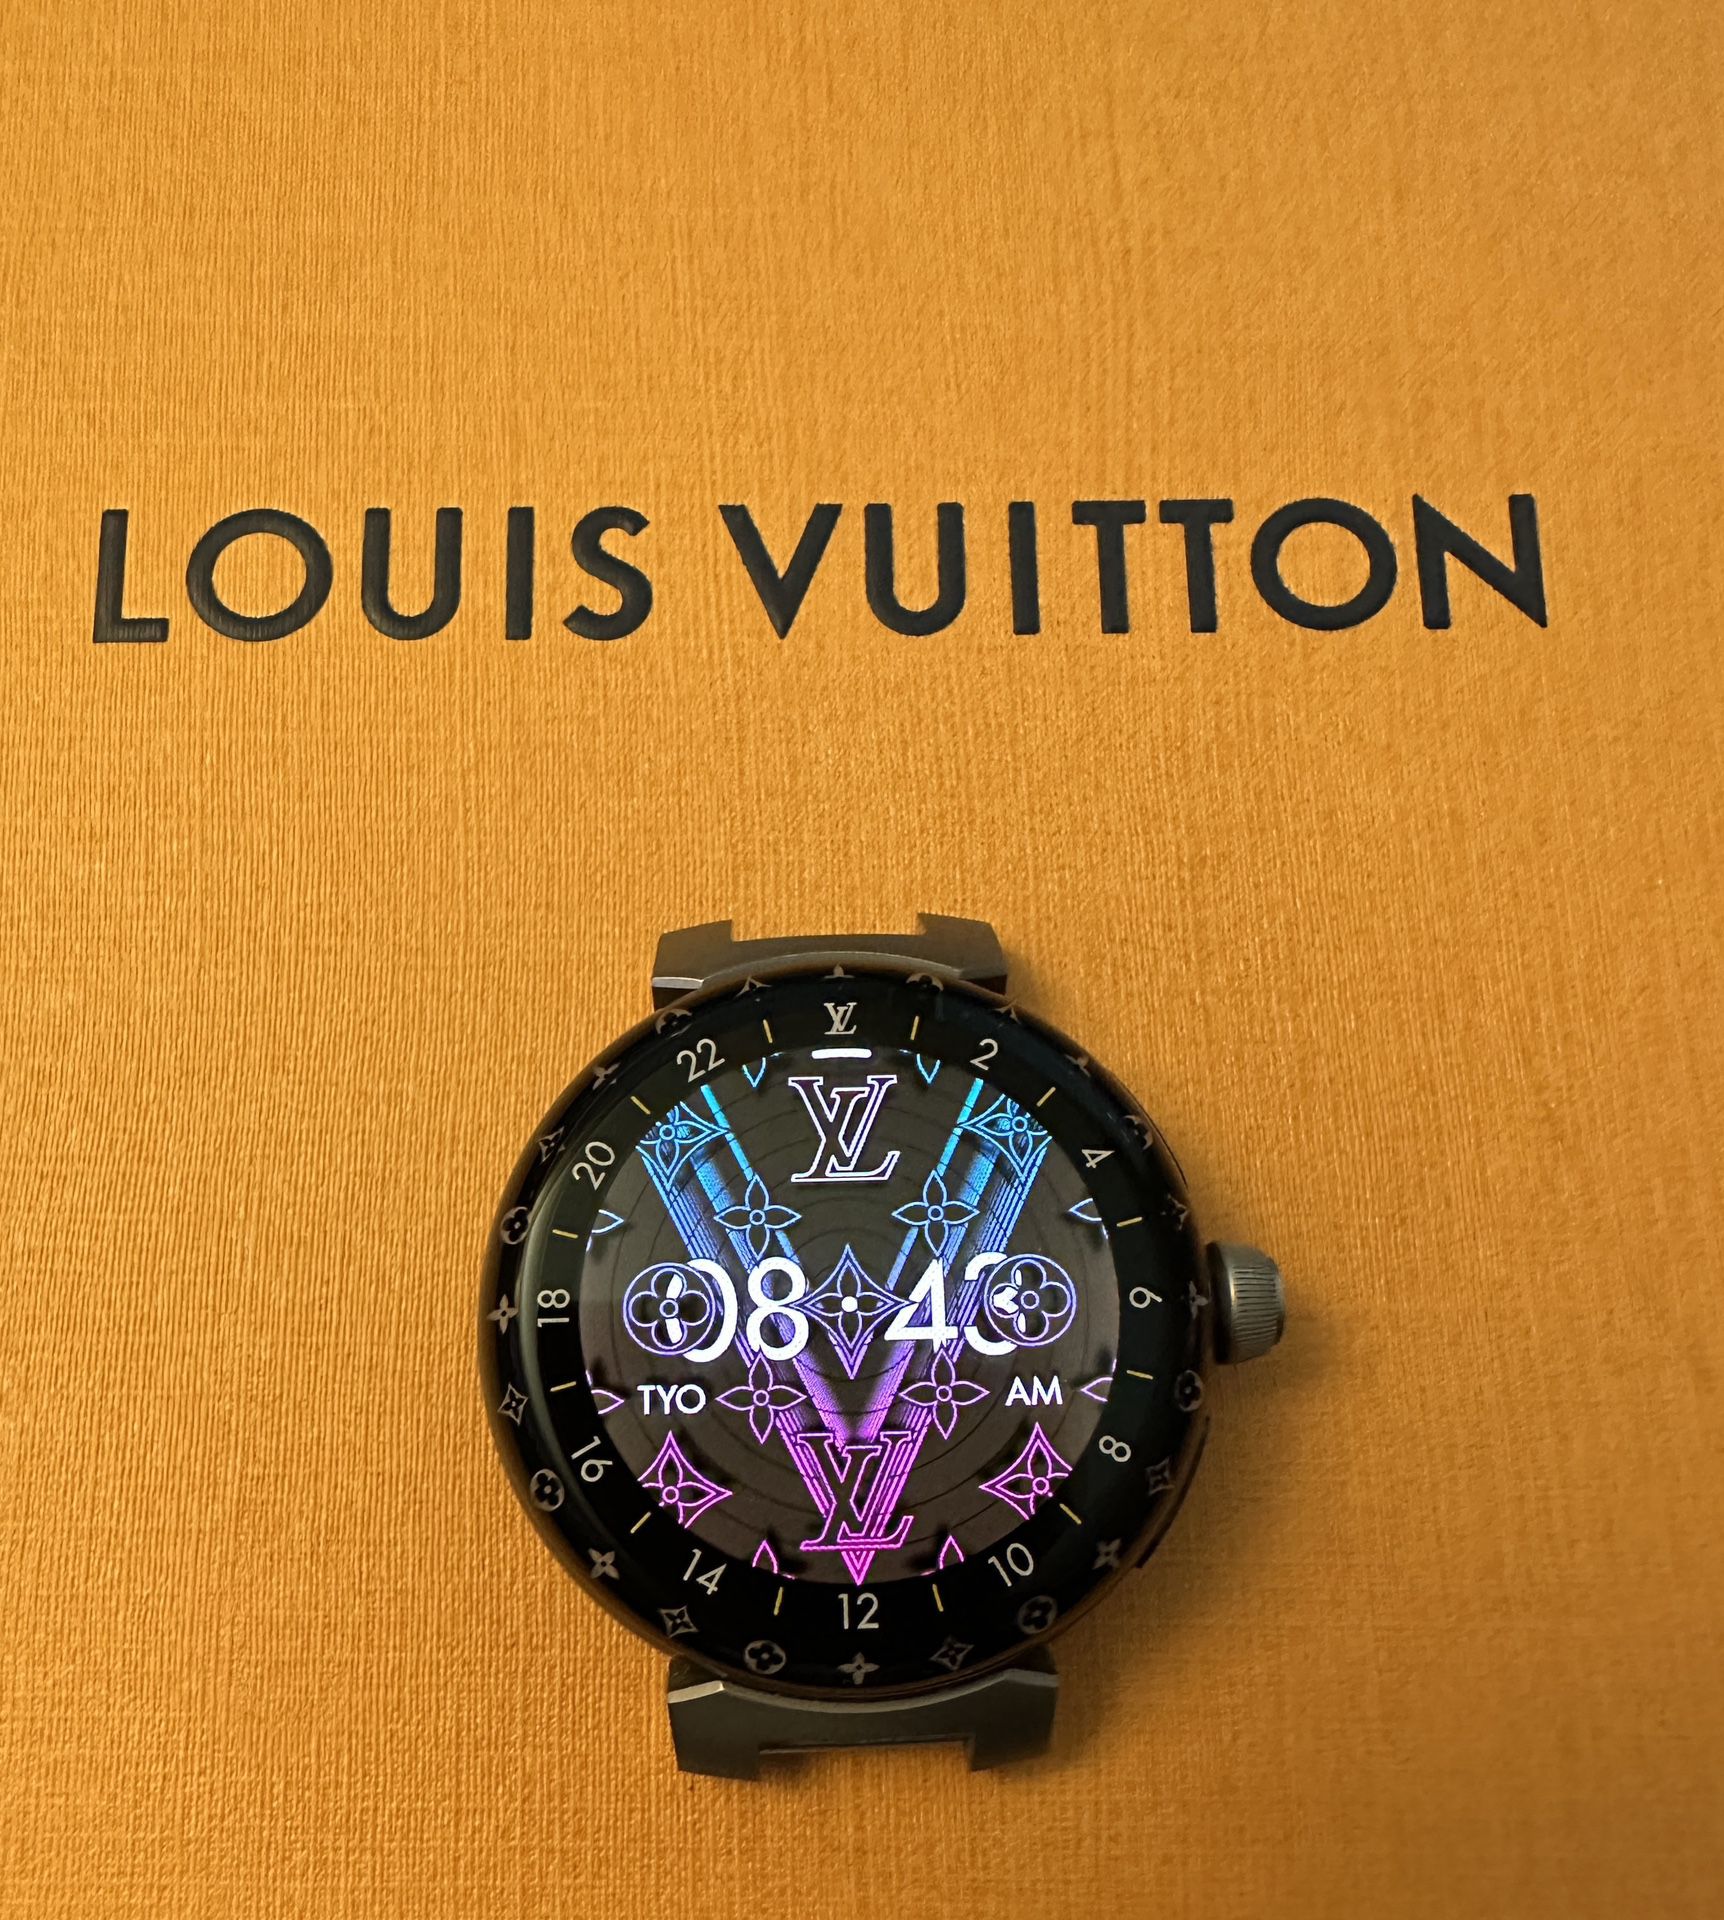 LOUIS VUITTON Tambour Horizon Light Up Connected Watch Black. Size